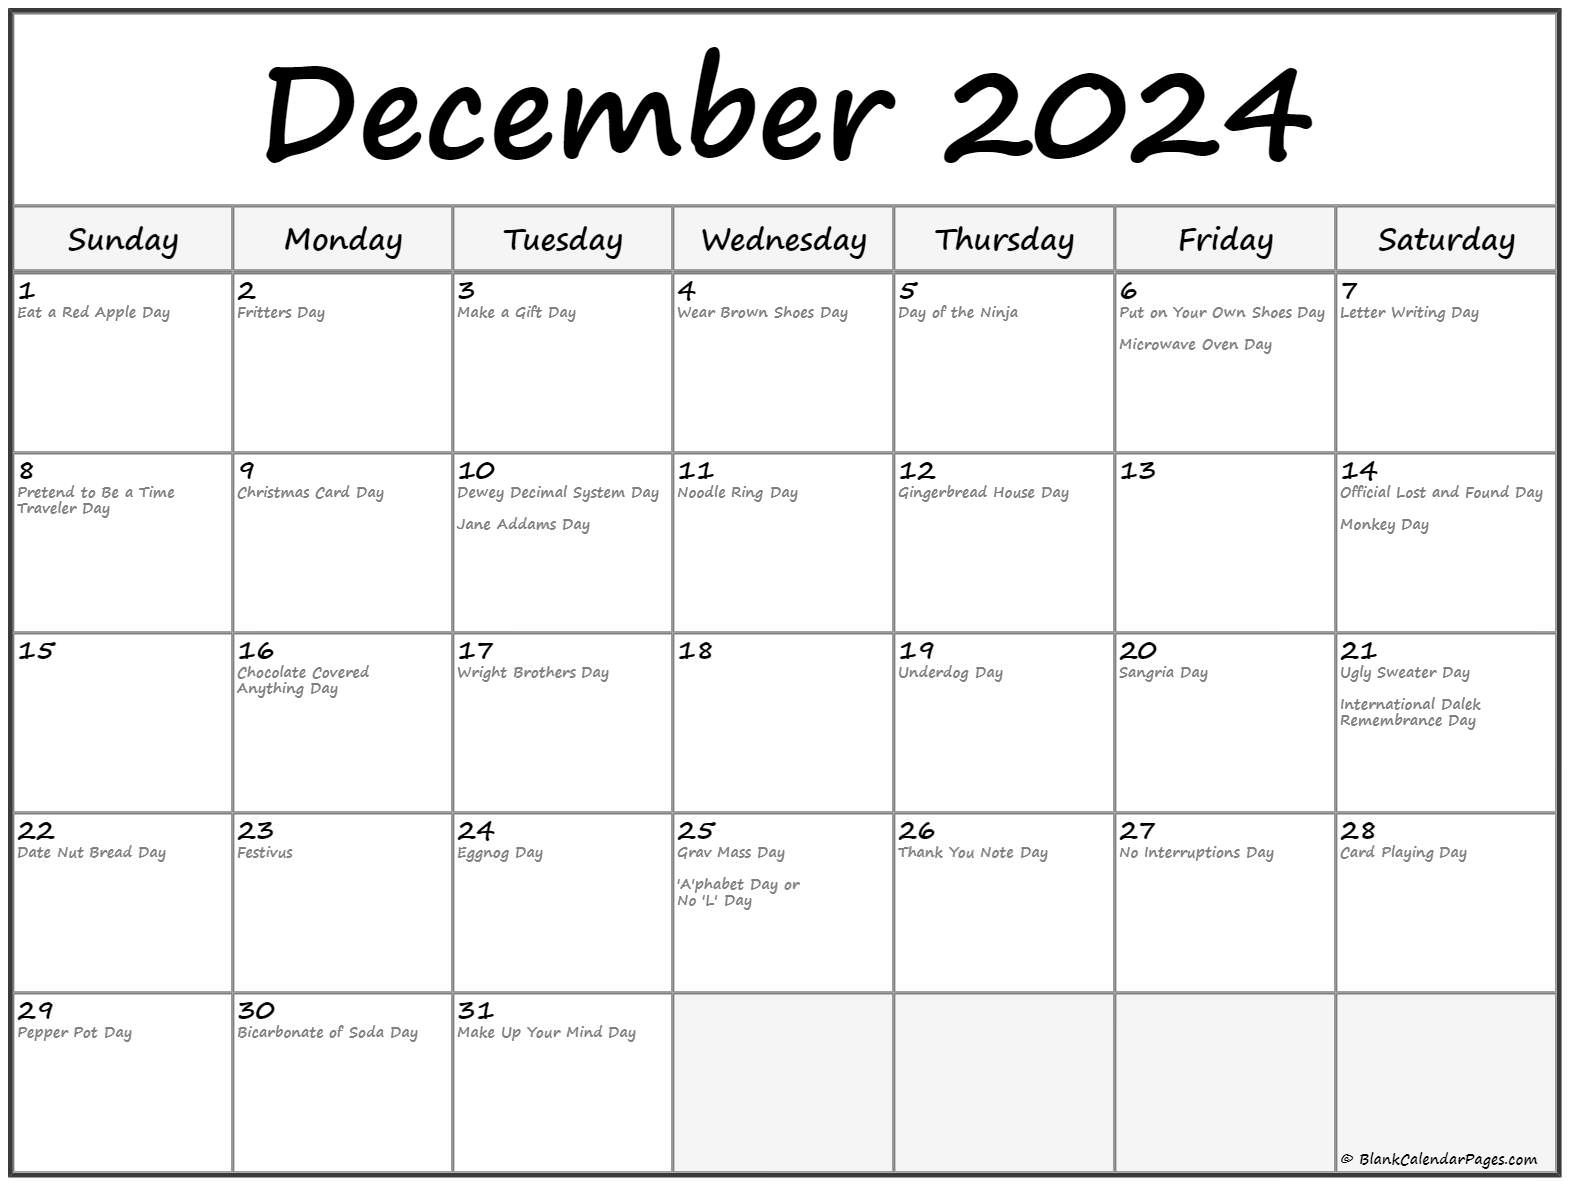 December 2019 calendar with holidays